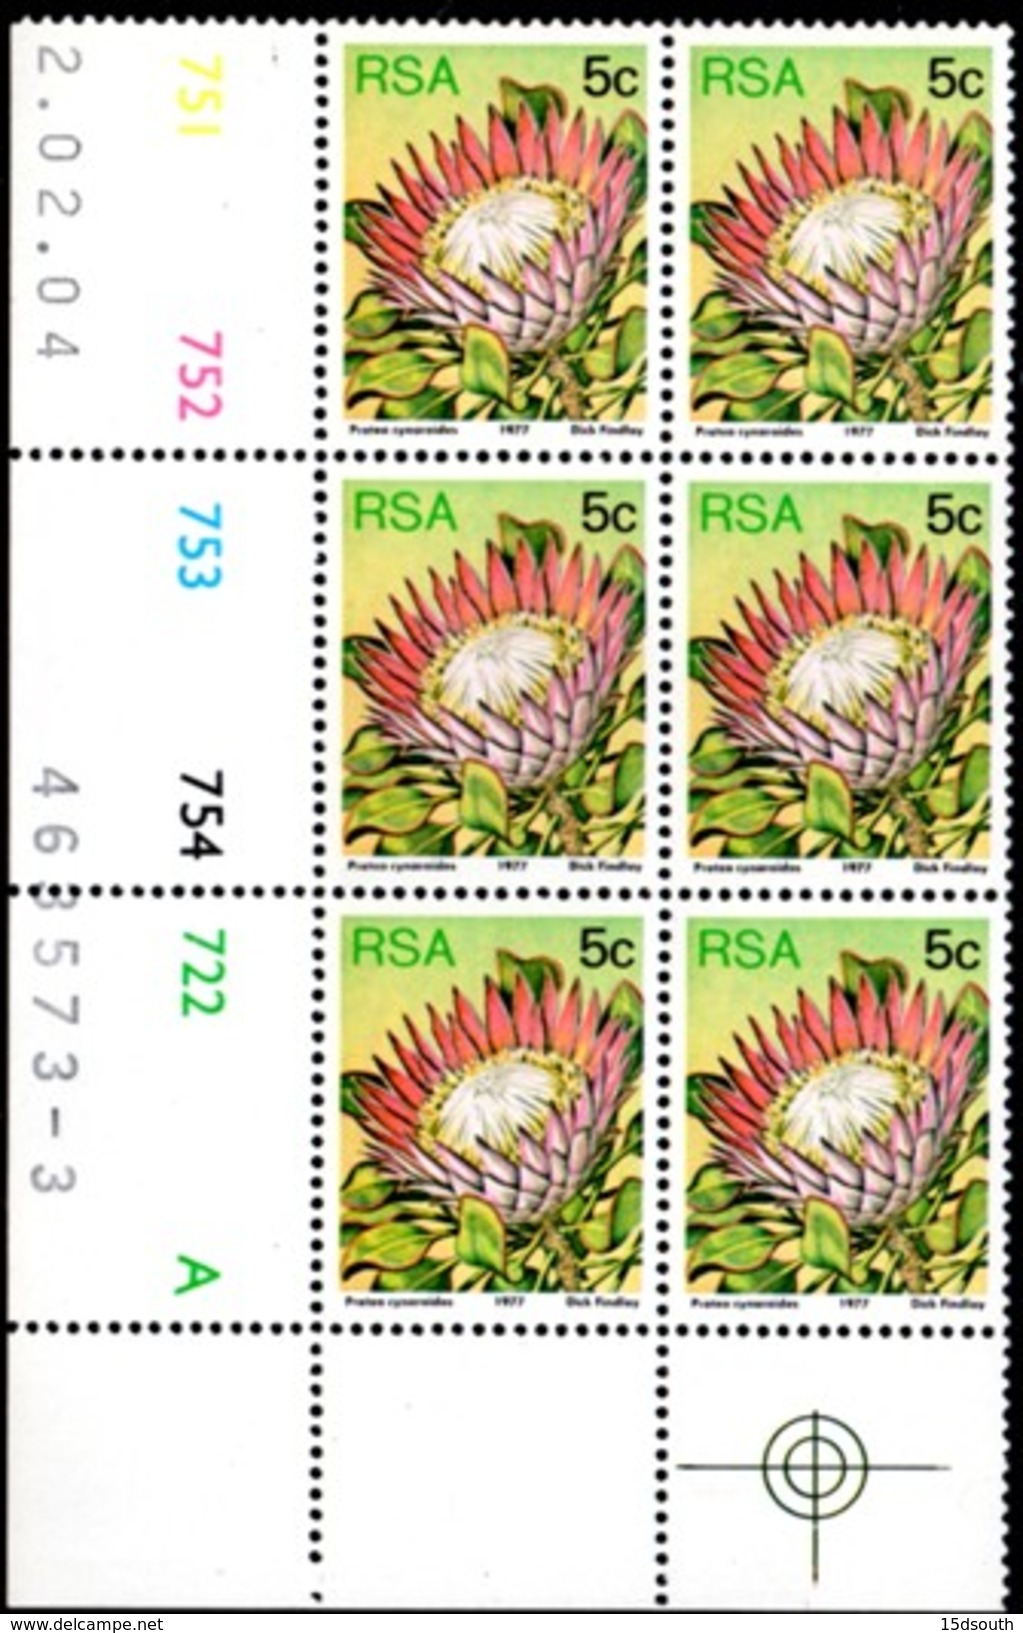 South Africa - 1982 Proteas 5c Perf 14 Control Block Pane A (**) (1982.02.04) - Blocks & Sheetlets